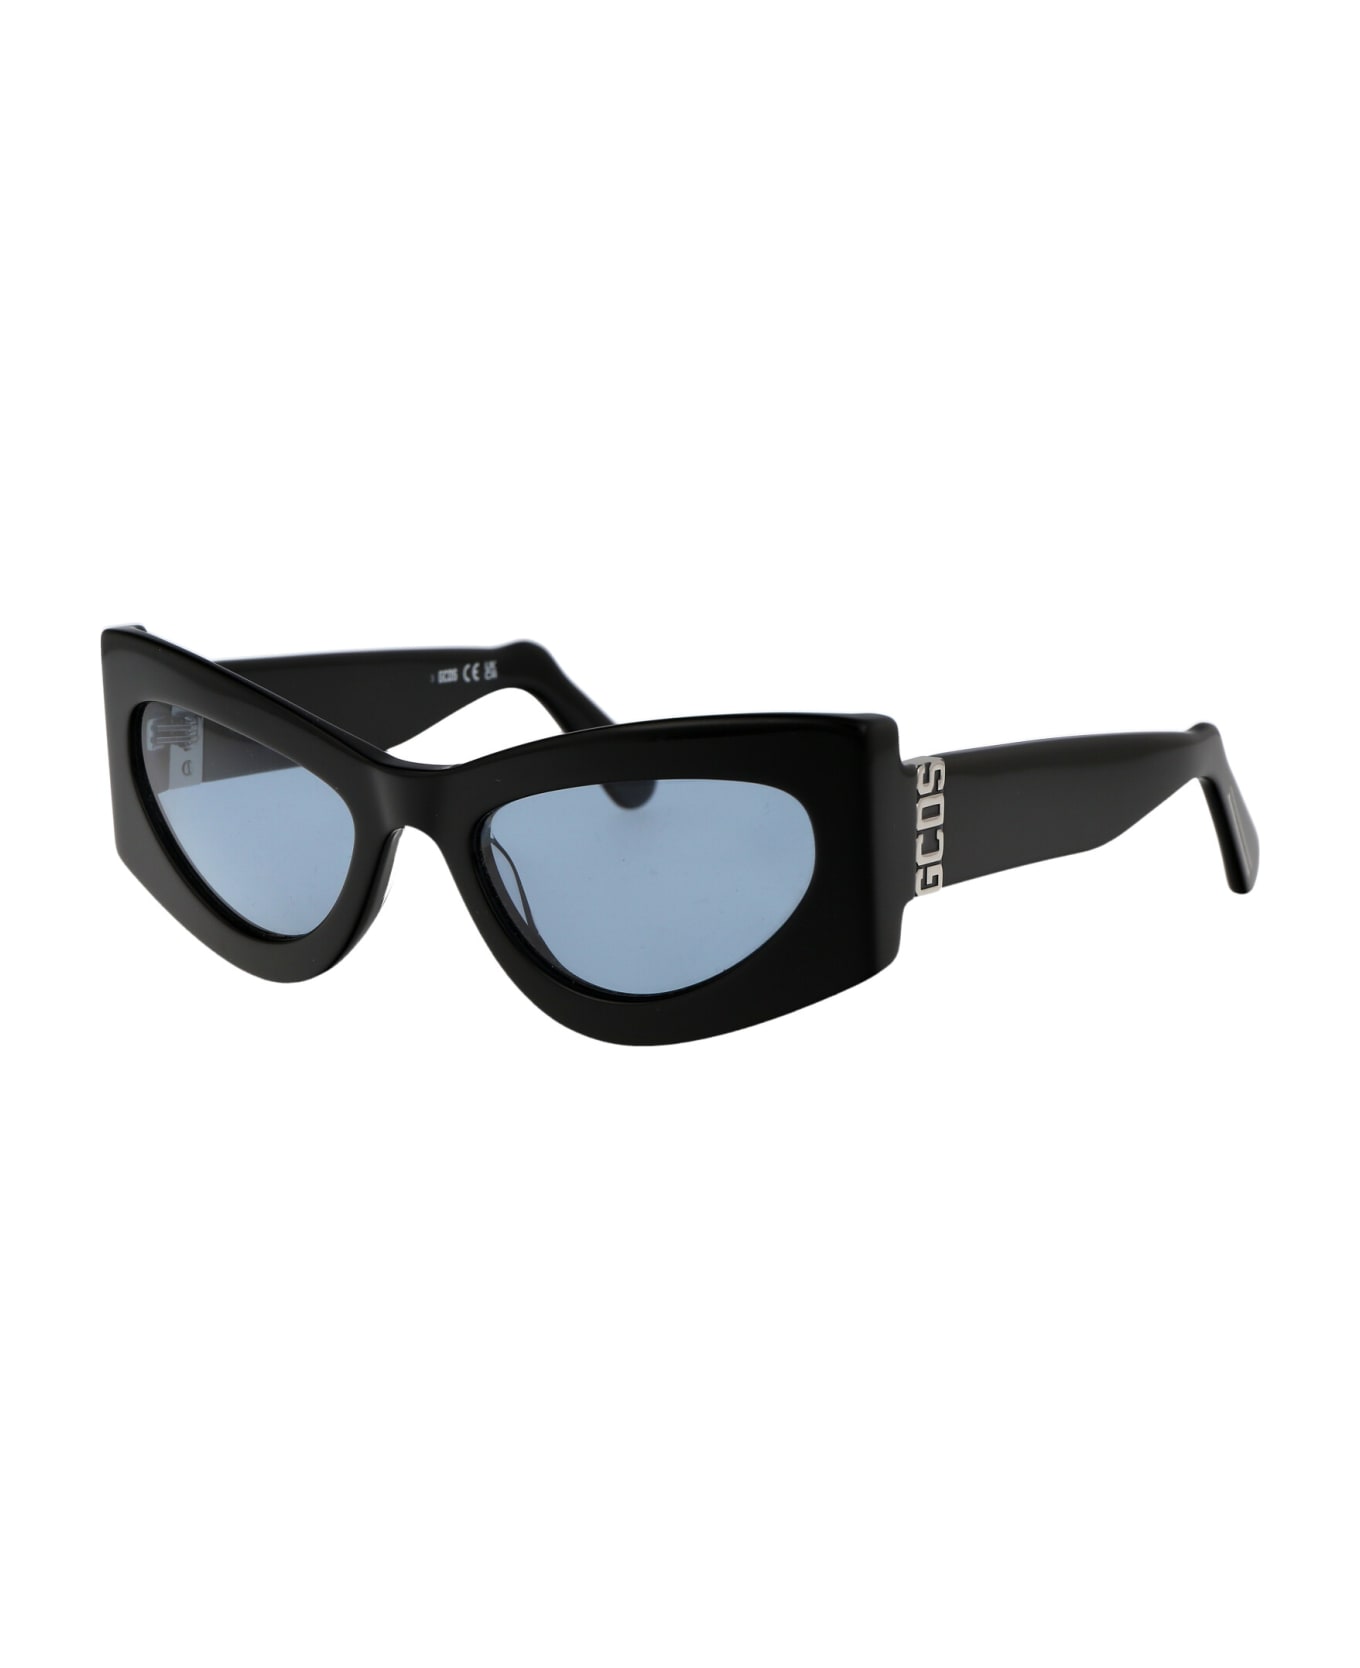 GCDS Gd0036/s Sunglasses - 01V BLACK BLUE サングラス